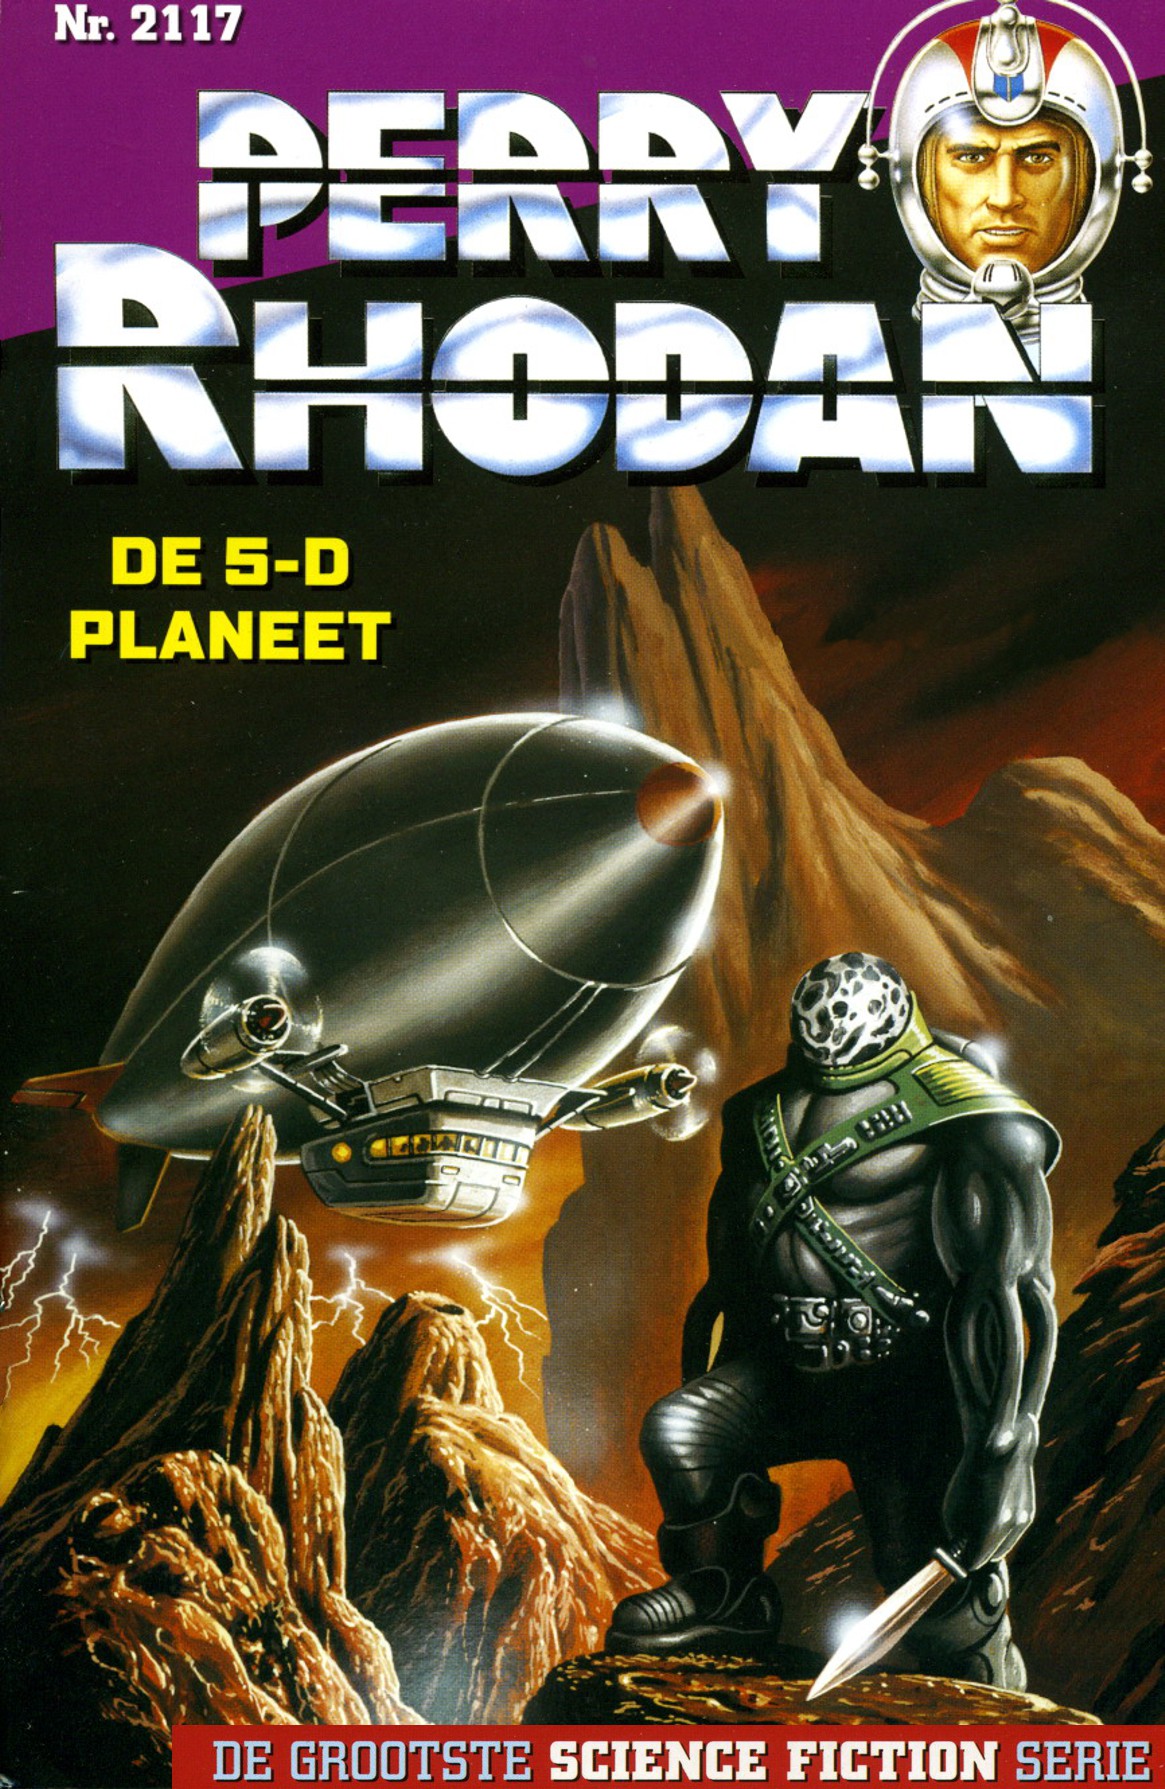 Perry Rhodan 2117 - De 5-D planeet